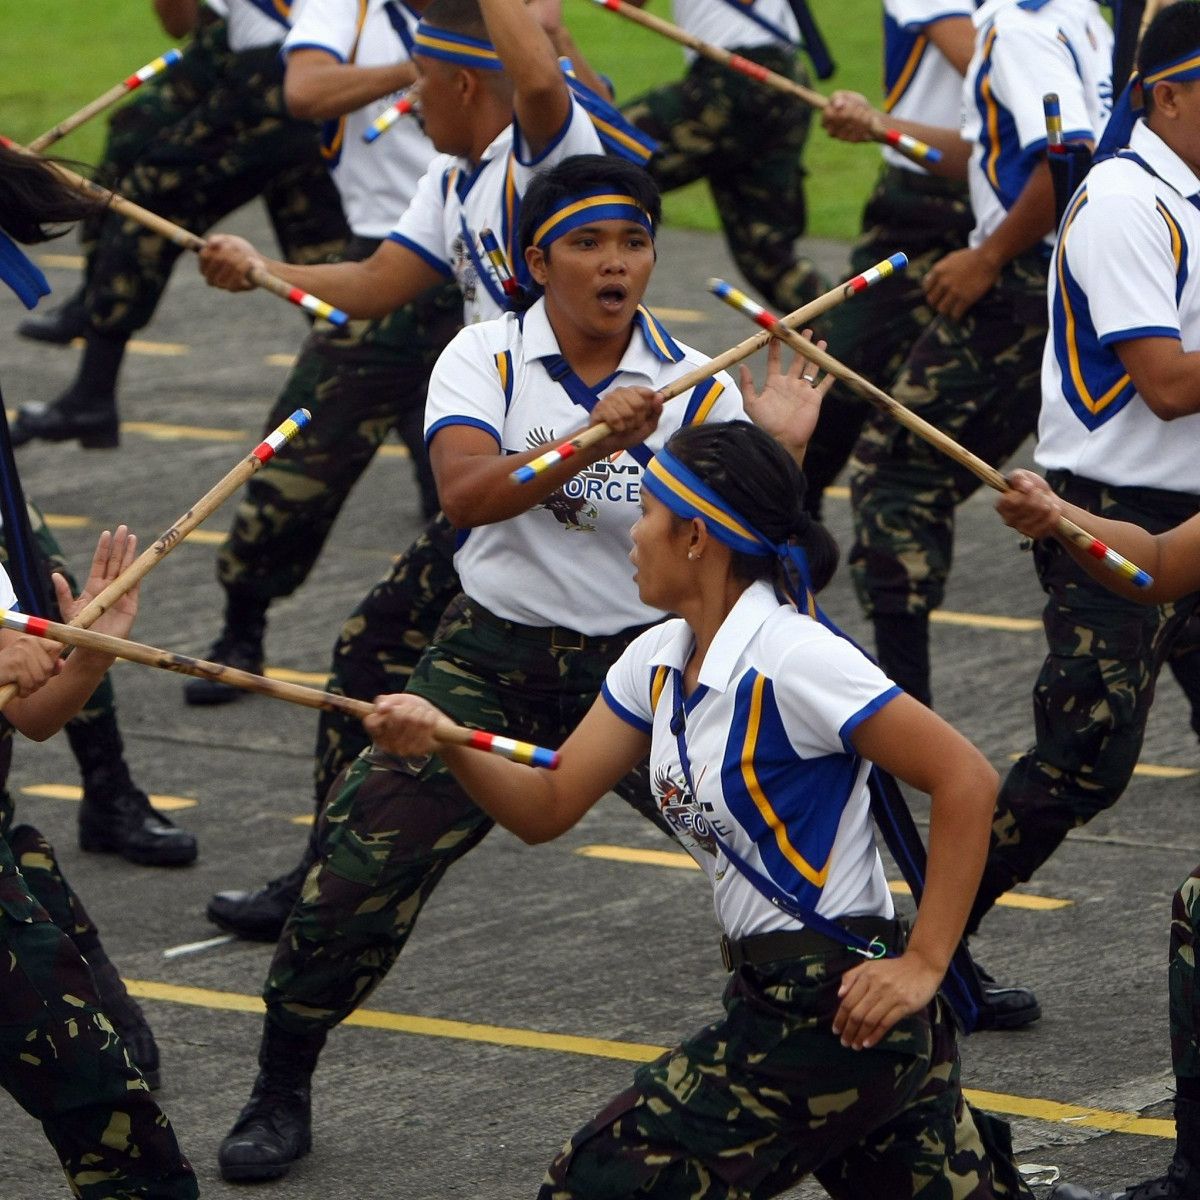 Filipino Martial Arts  Warrior Combat Systems Kali